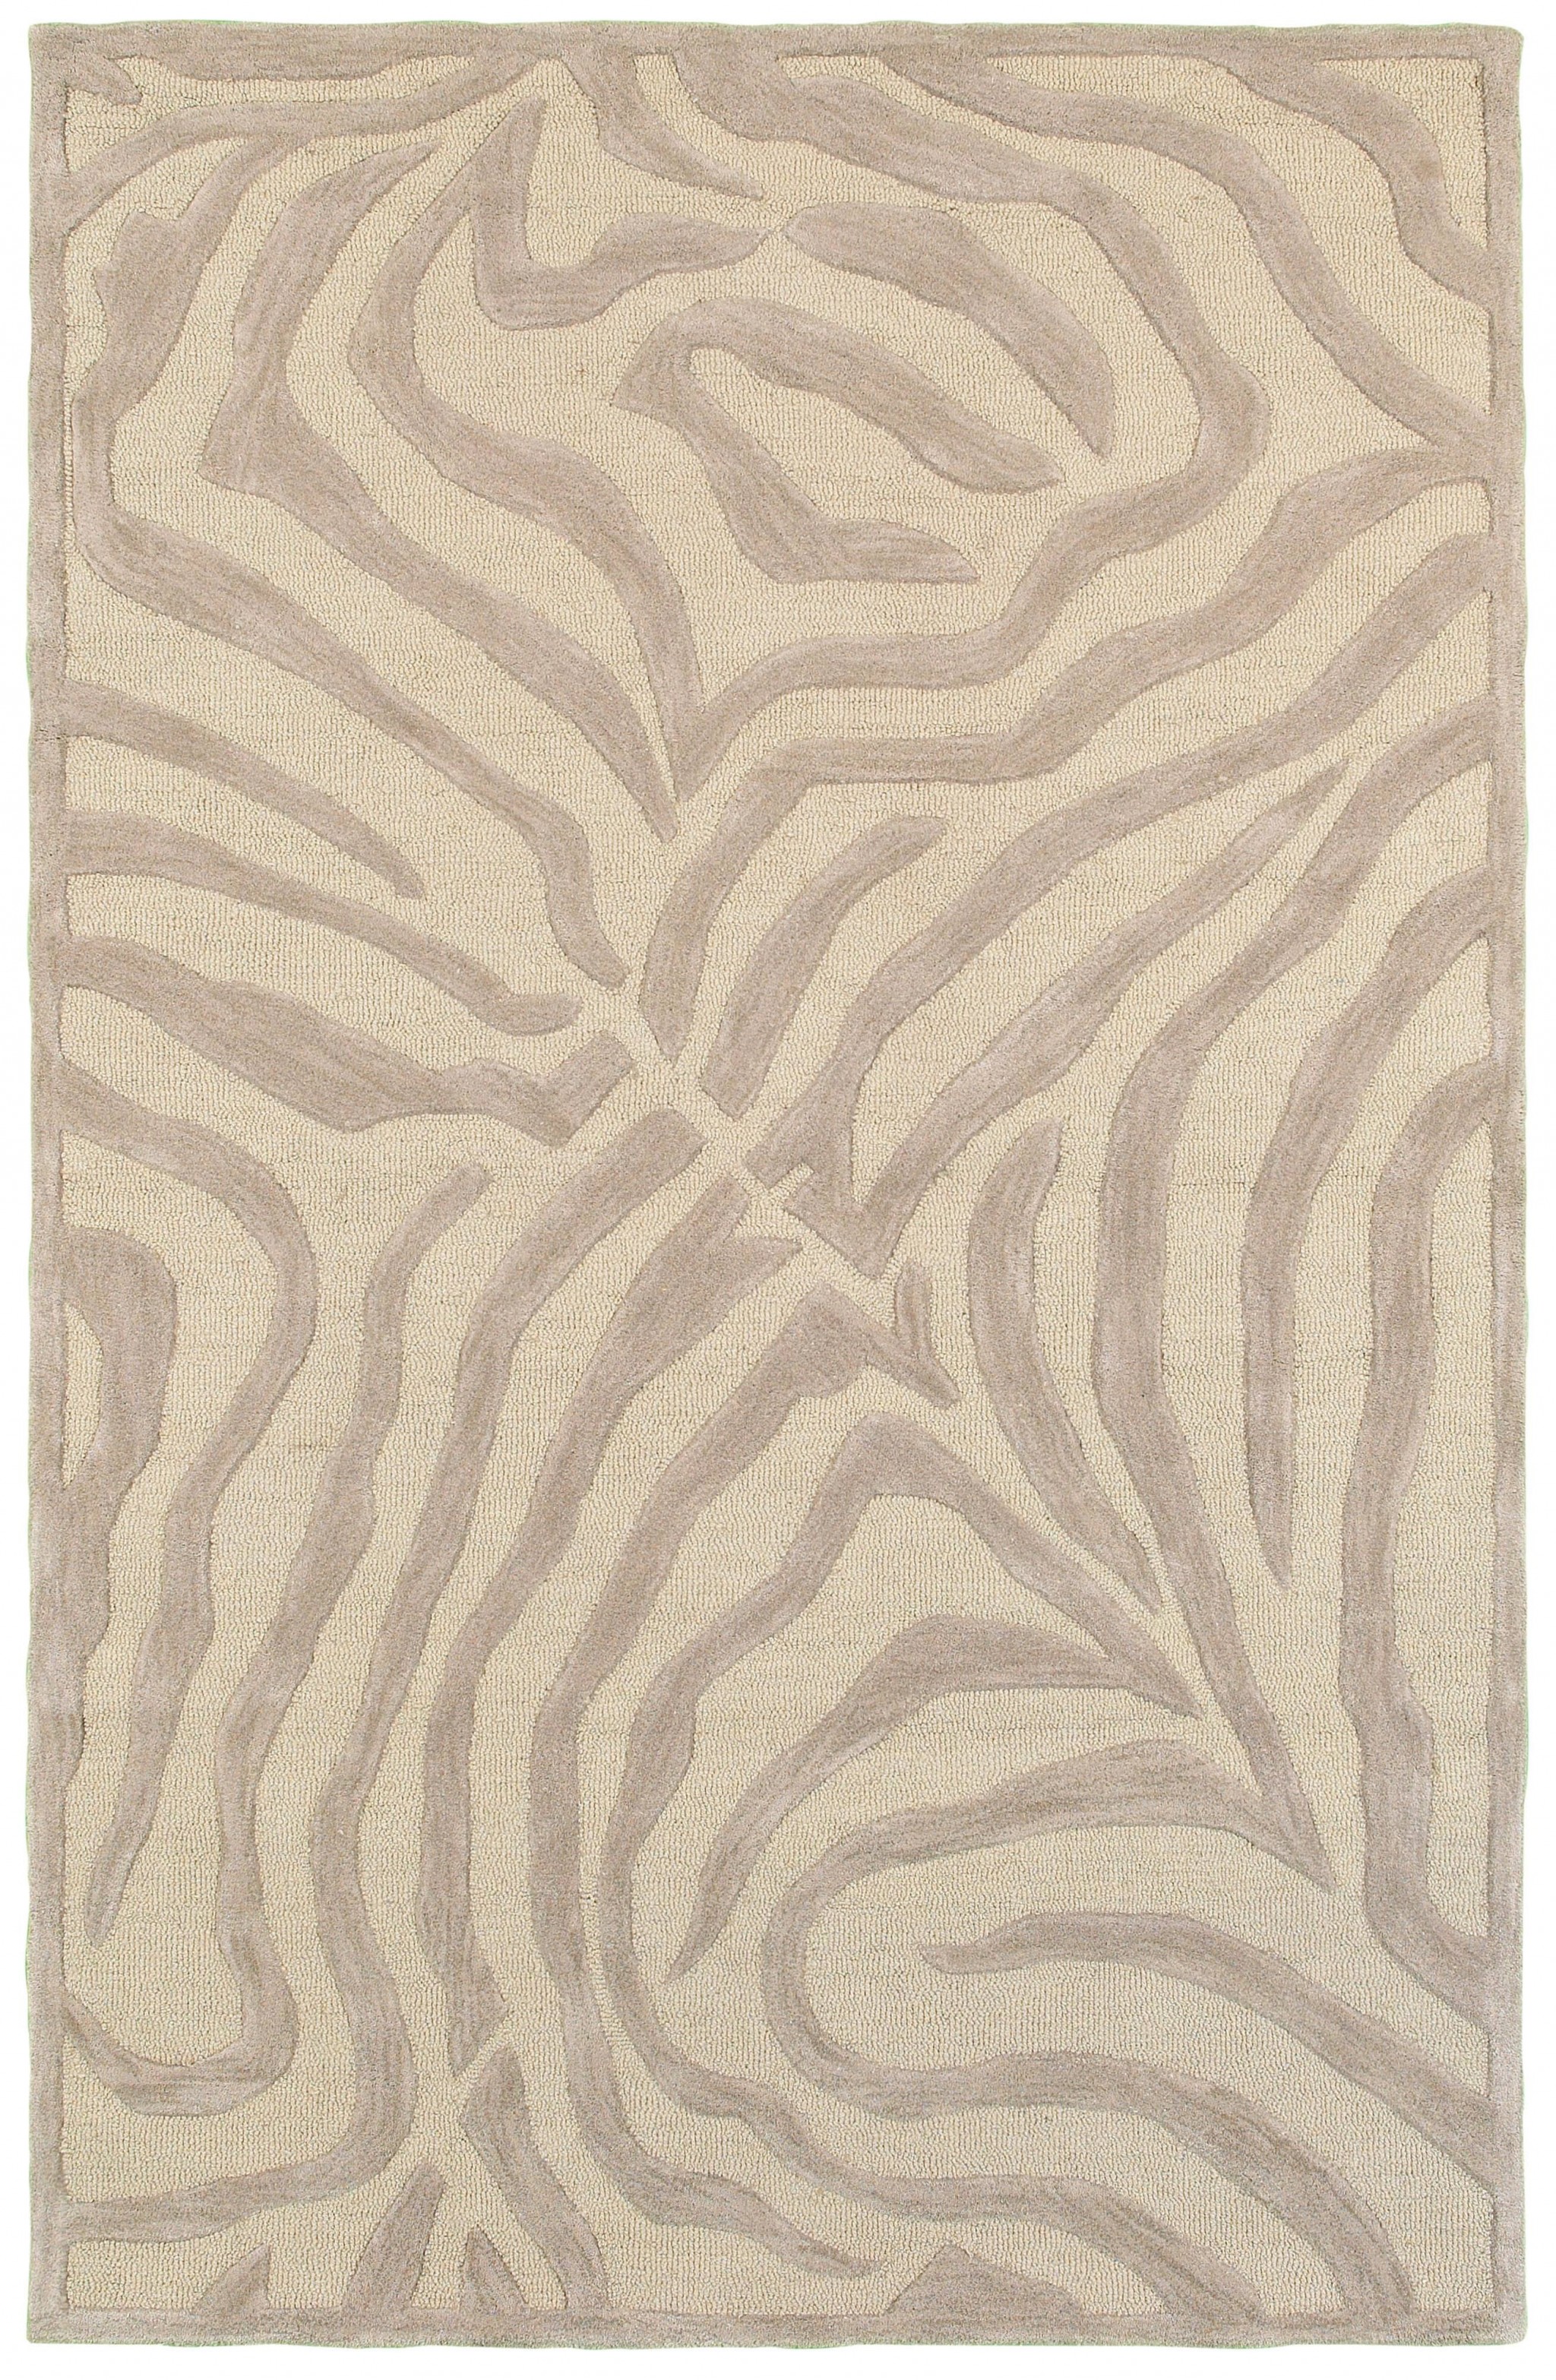 5’ x 8' Taupe Zebra Pattern Area Rug-395615-1